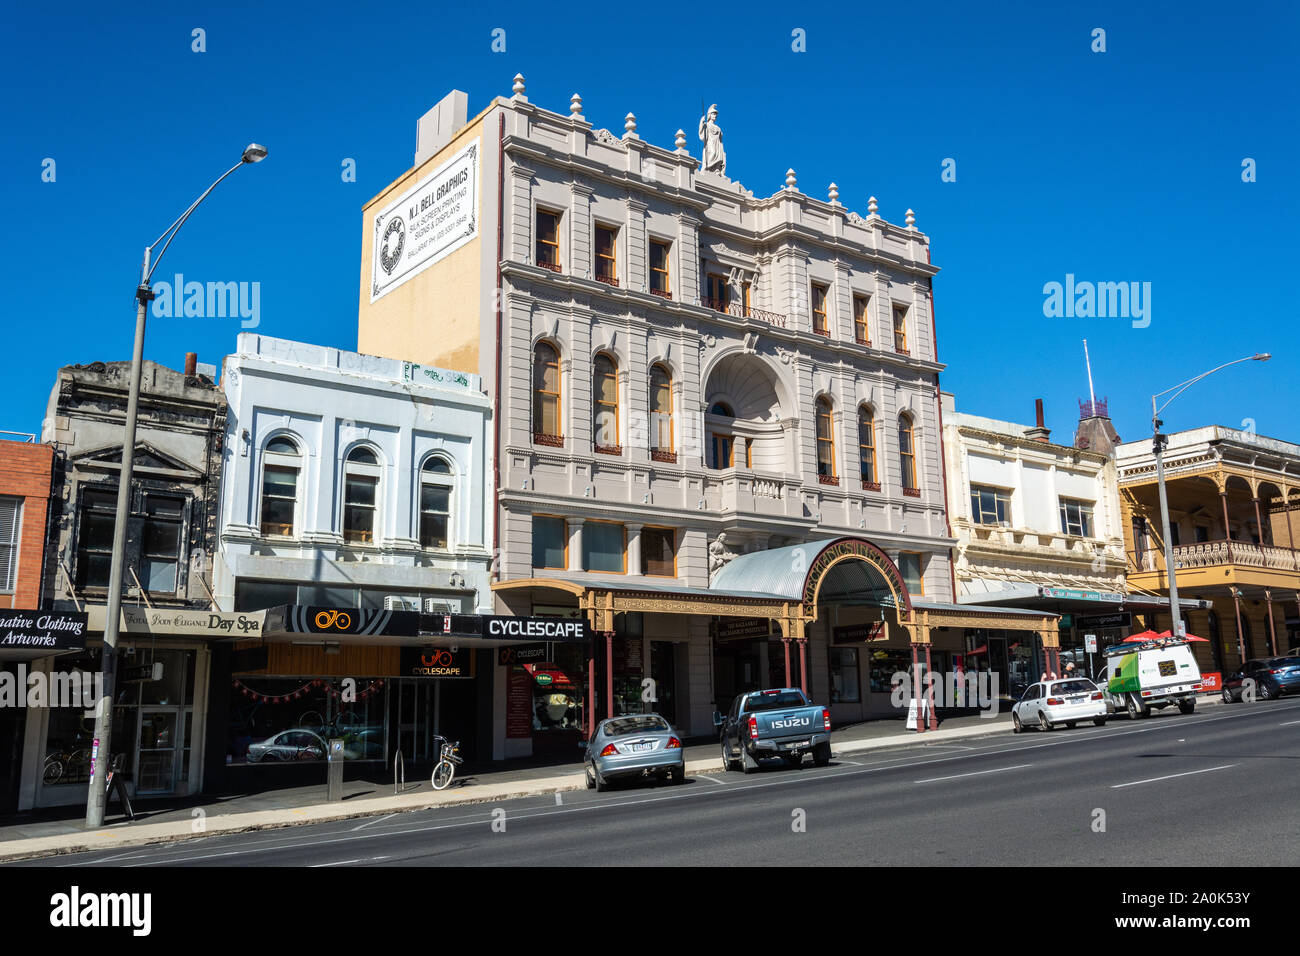 Ballarat, Victoria, Australia - March 8, 2017. Street view on Sturt Street in Ballarat, VIC, with Victorian buildings and cars. Stock Photo